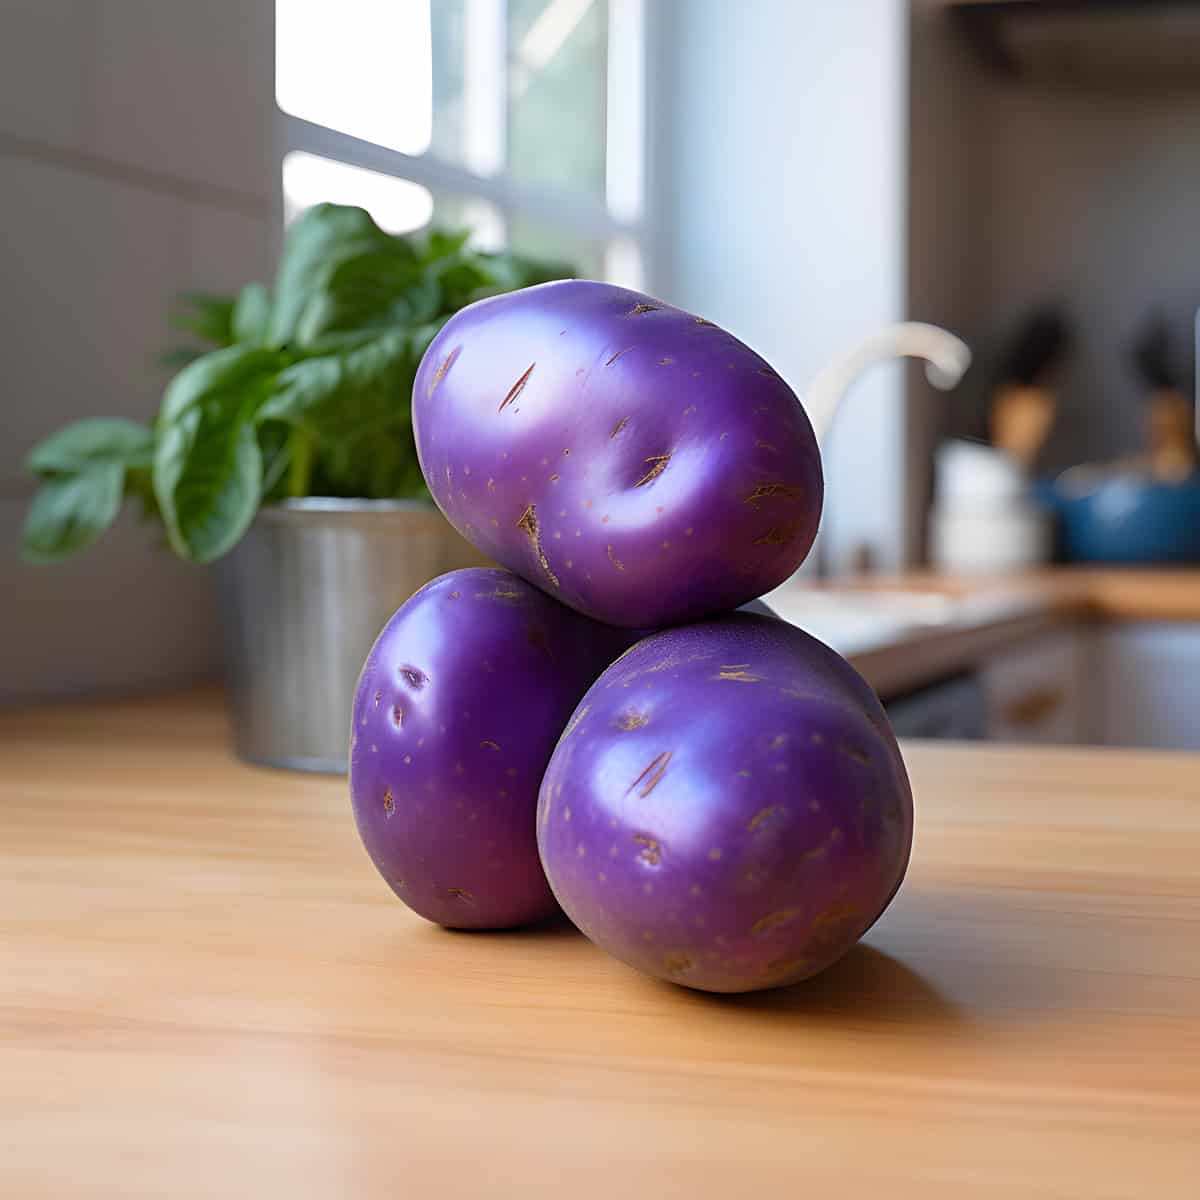 Royal Blue Potatoes on a kitchen counter